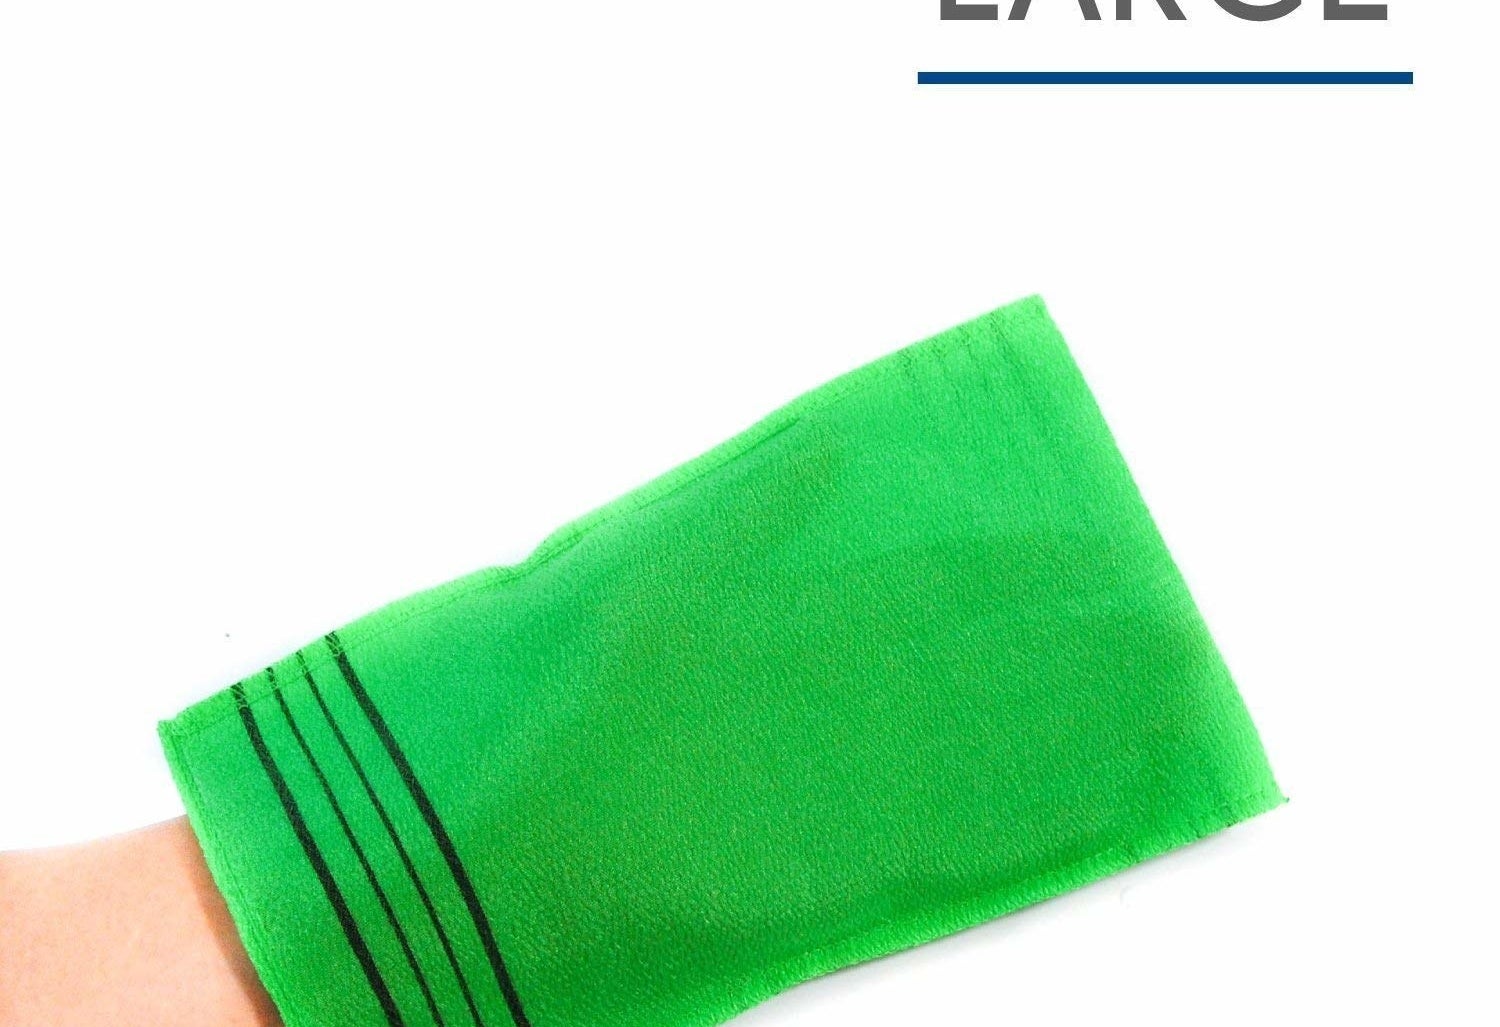 green washcloth on a hand